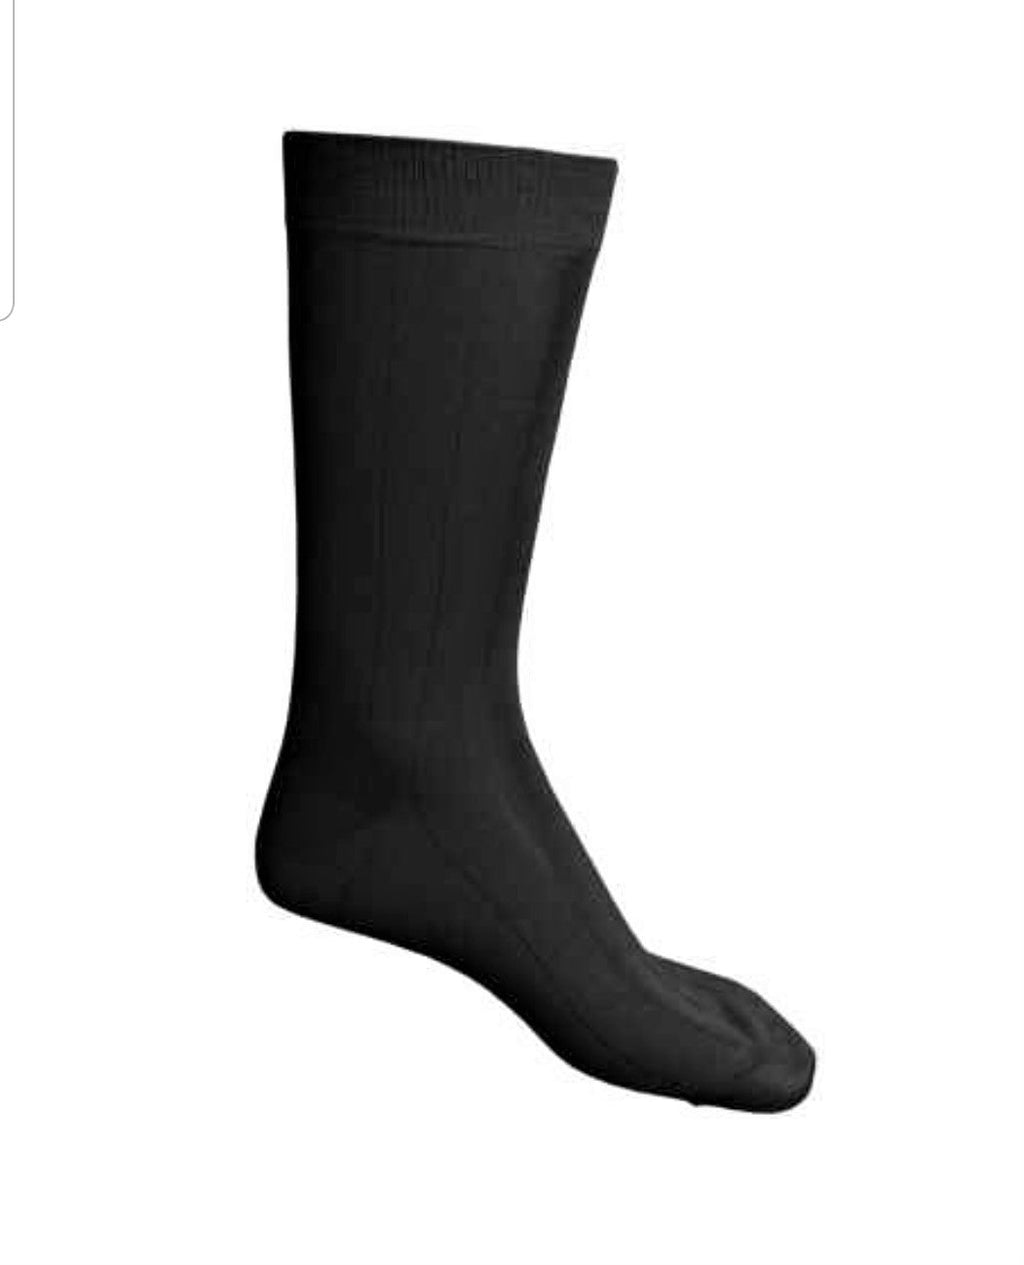 Copy WideBundle of Black Dress Socks